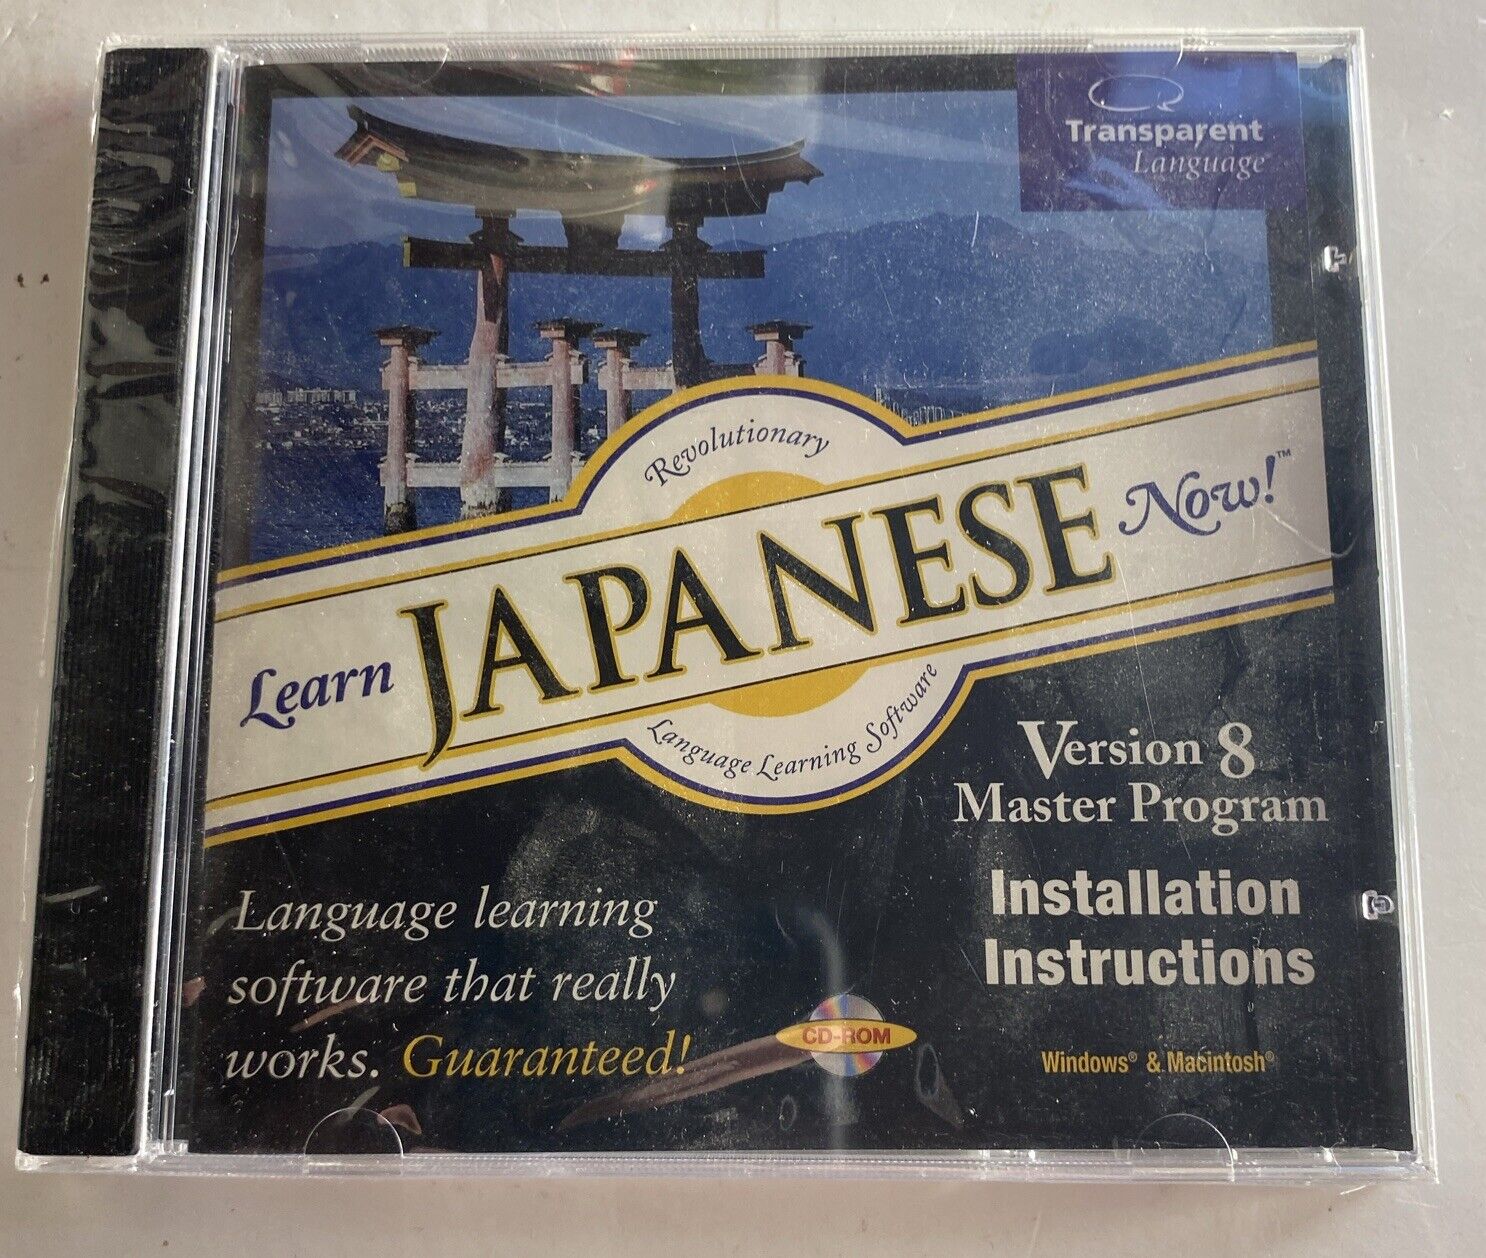 Learn JAPANESE Now Transparent Language (Verison 8 CD-ROM) Brand New Sealed